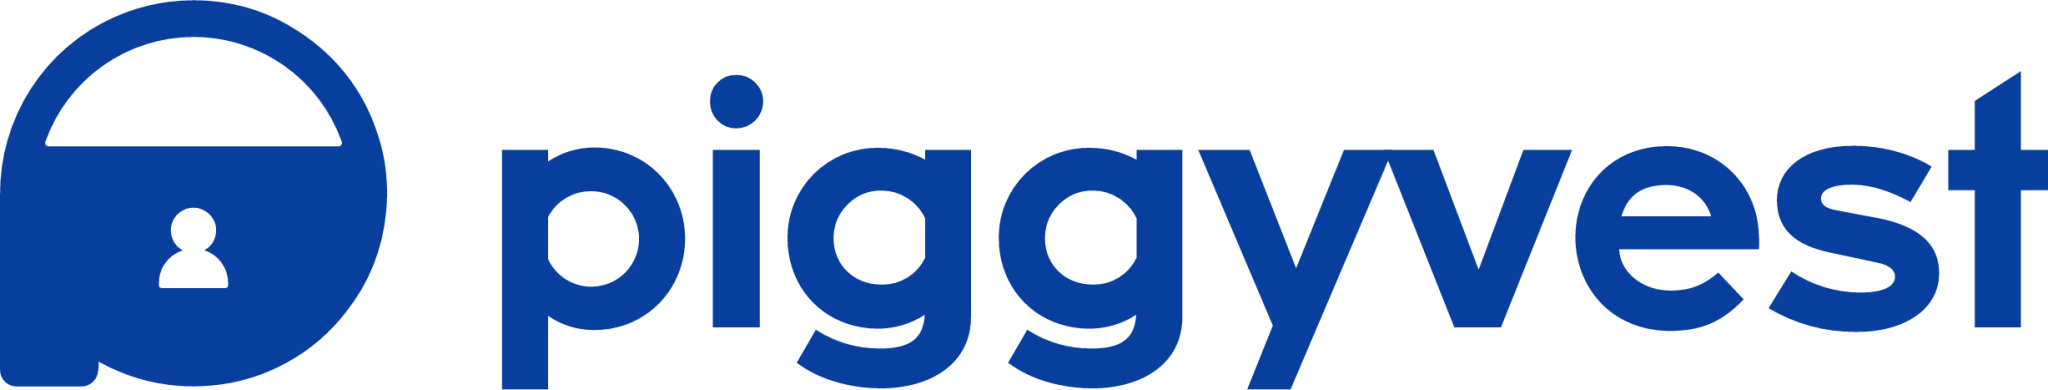 piggyvest_logo